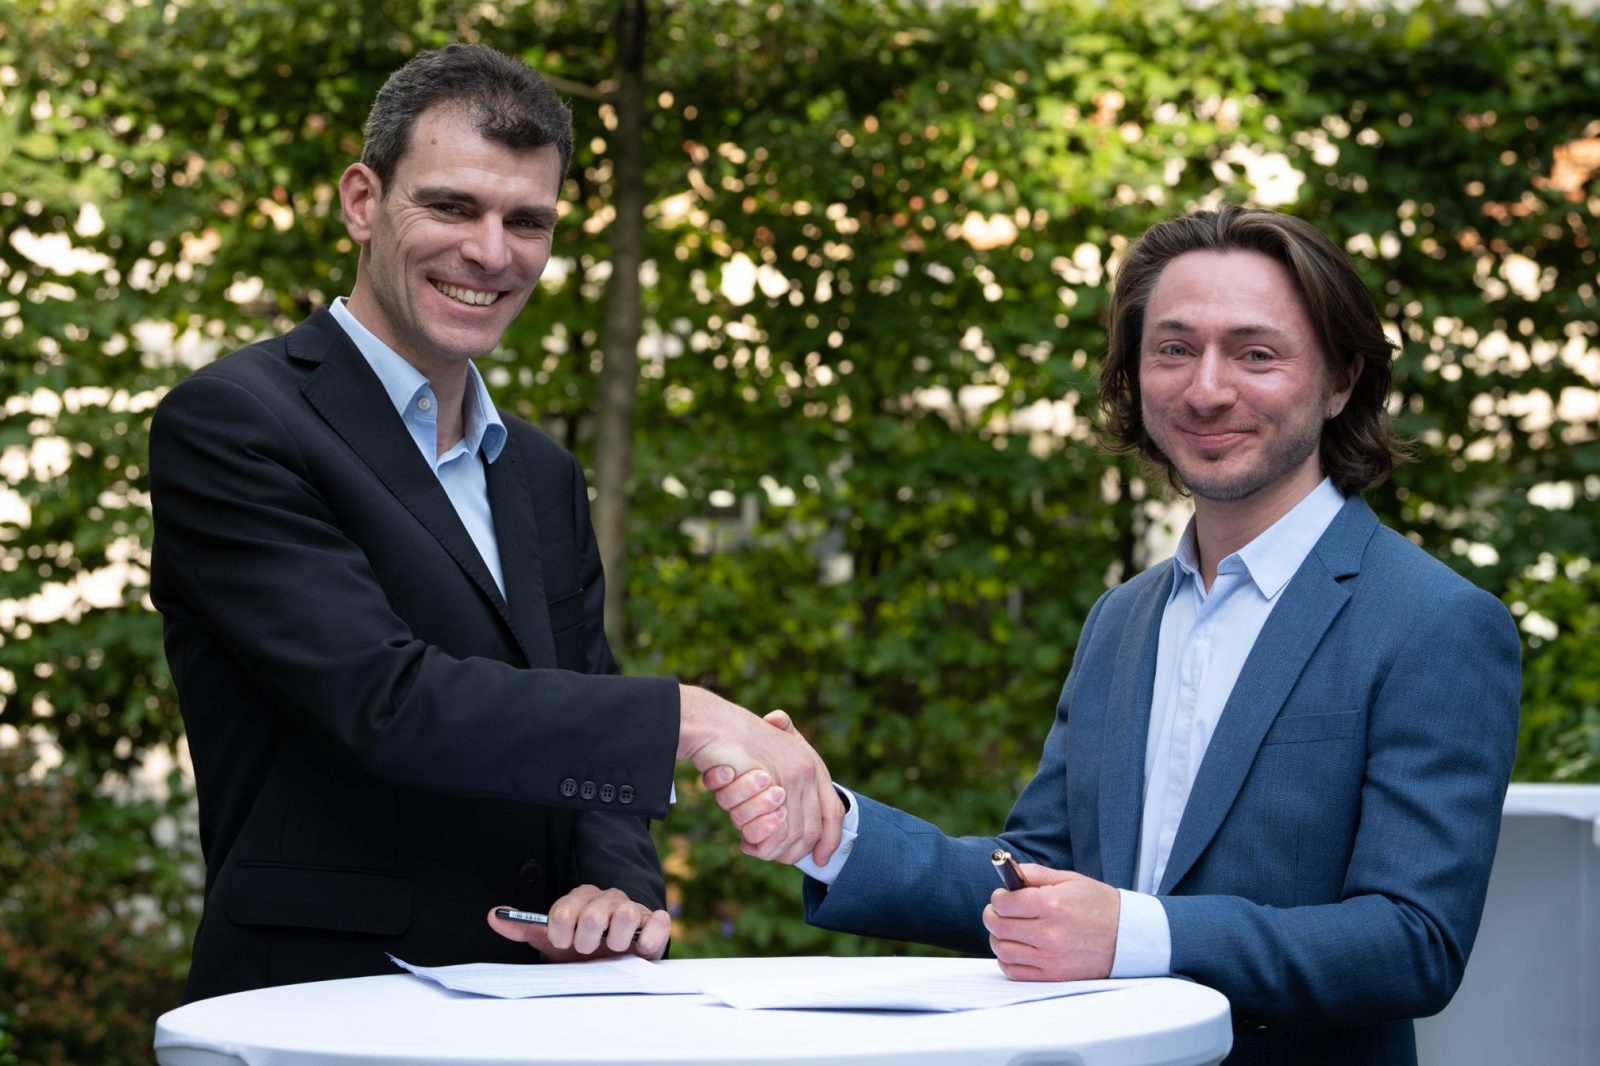 Pasqal CEO이자 C 창업자인 Georges-Olivier Reymond(왼쪽)와 Welinq CEO 겸 공동 창업자인 Tom Darras(오른쪽)는 상호 연결된 다중 QPU 시스템이라는 공통 목표를 향해 회사를 조정했습니다. (출처: 파스칼)